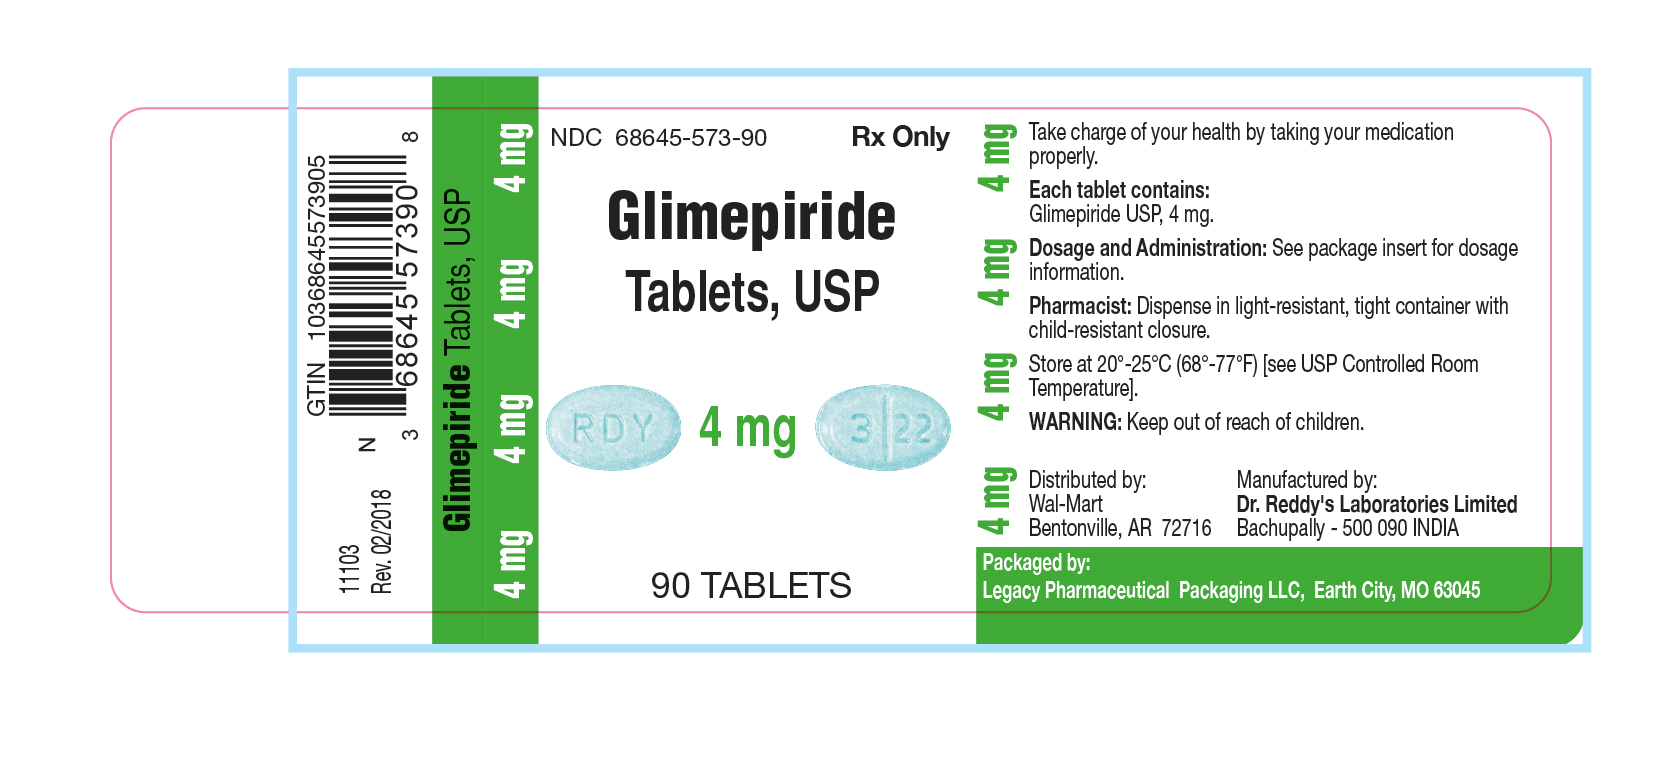 Glimepiride Tablets, USP 4 mg